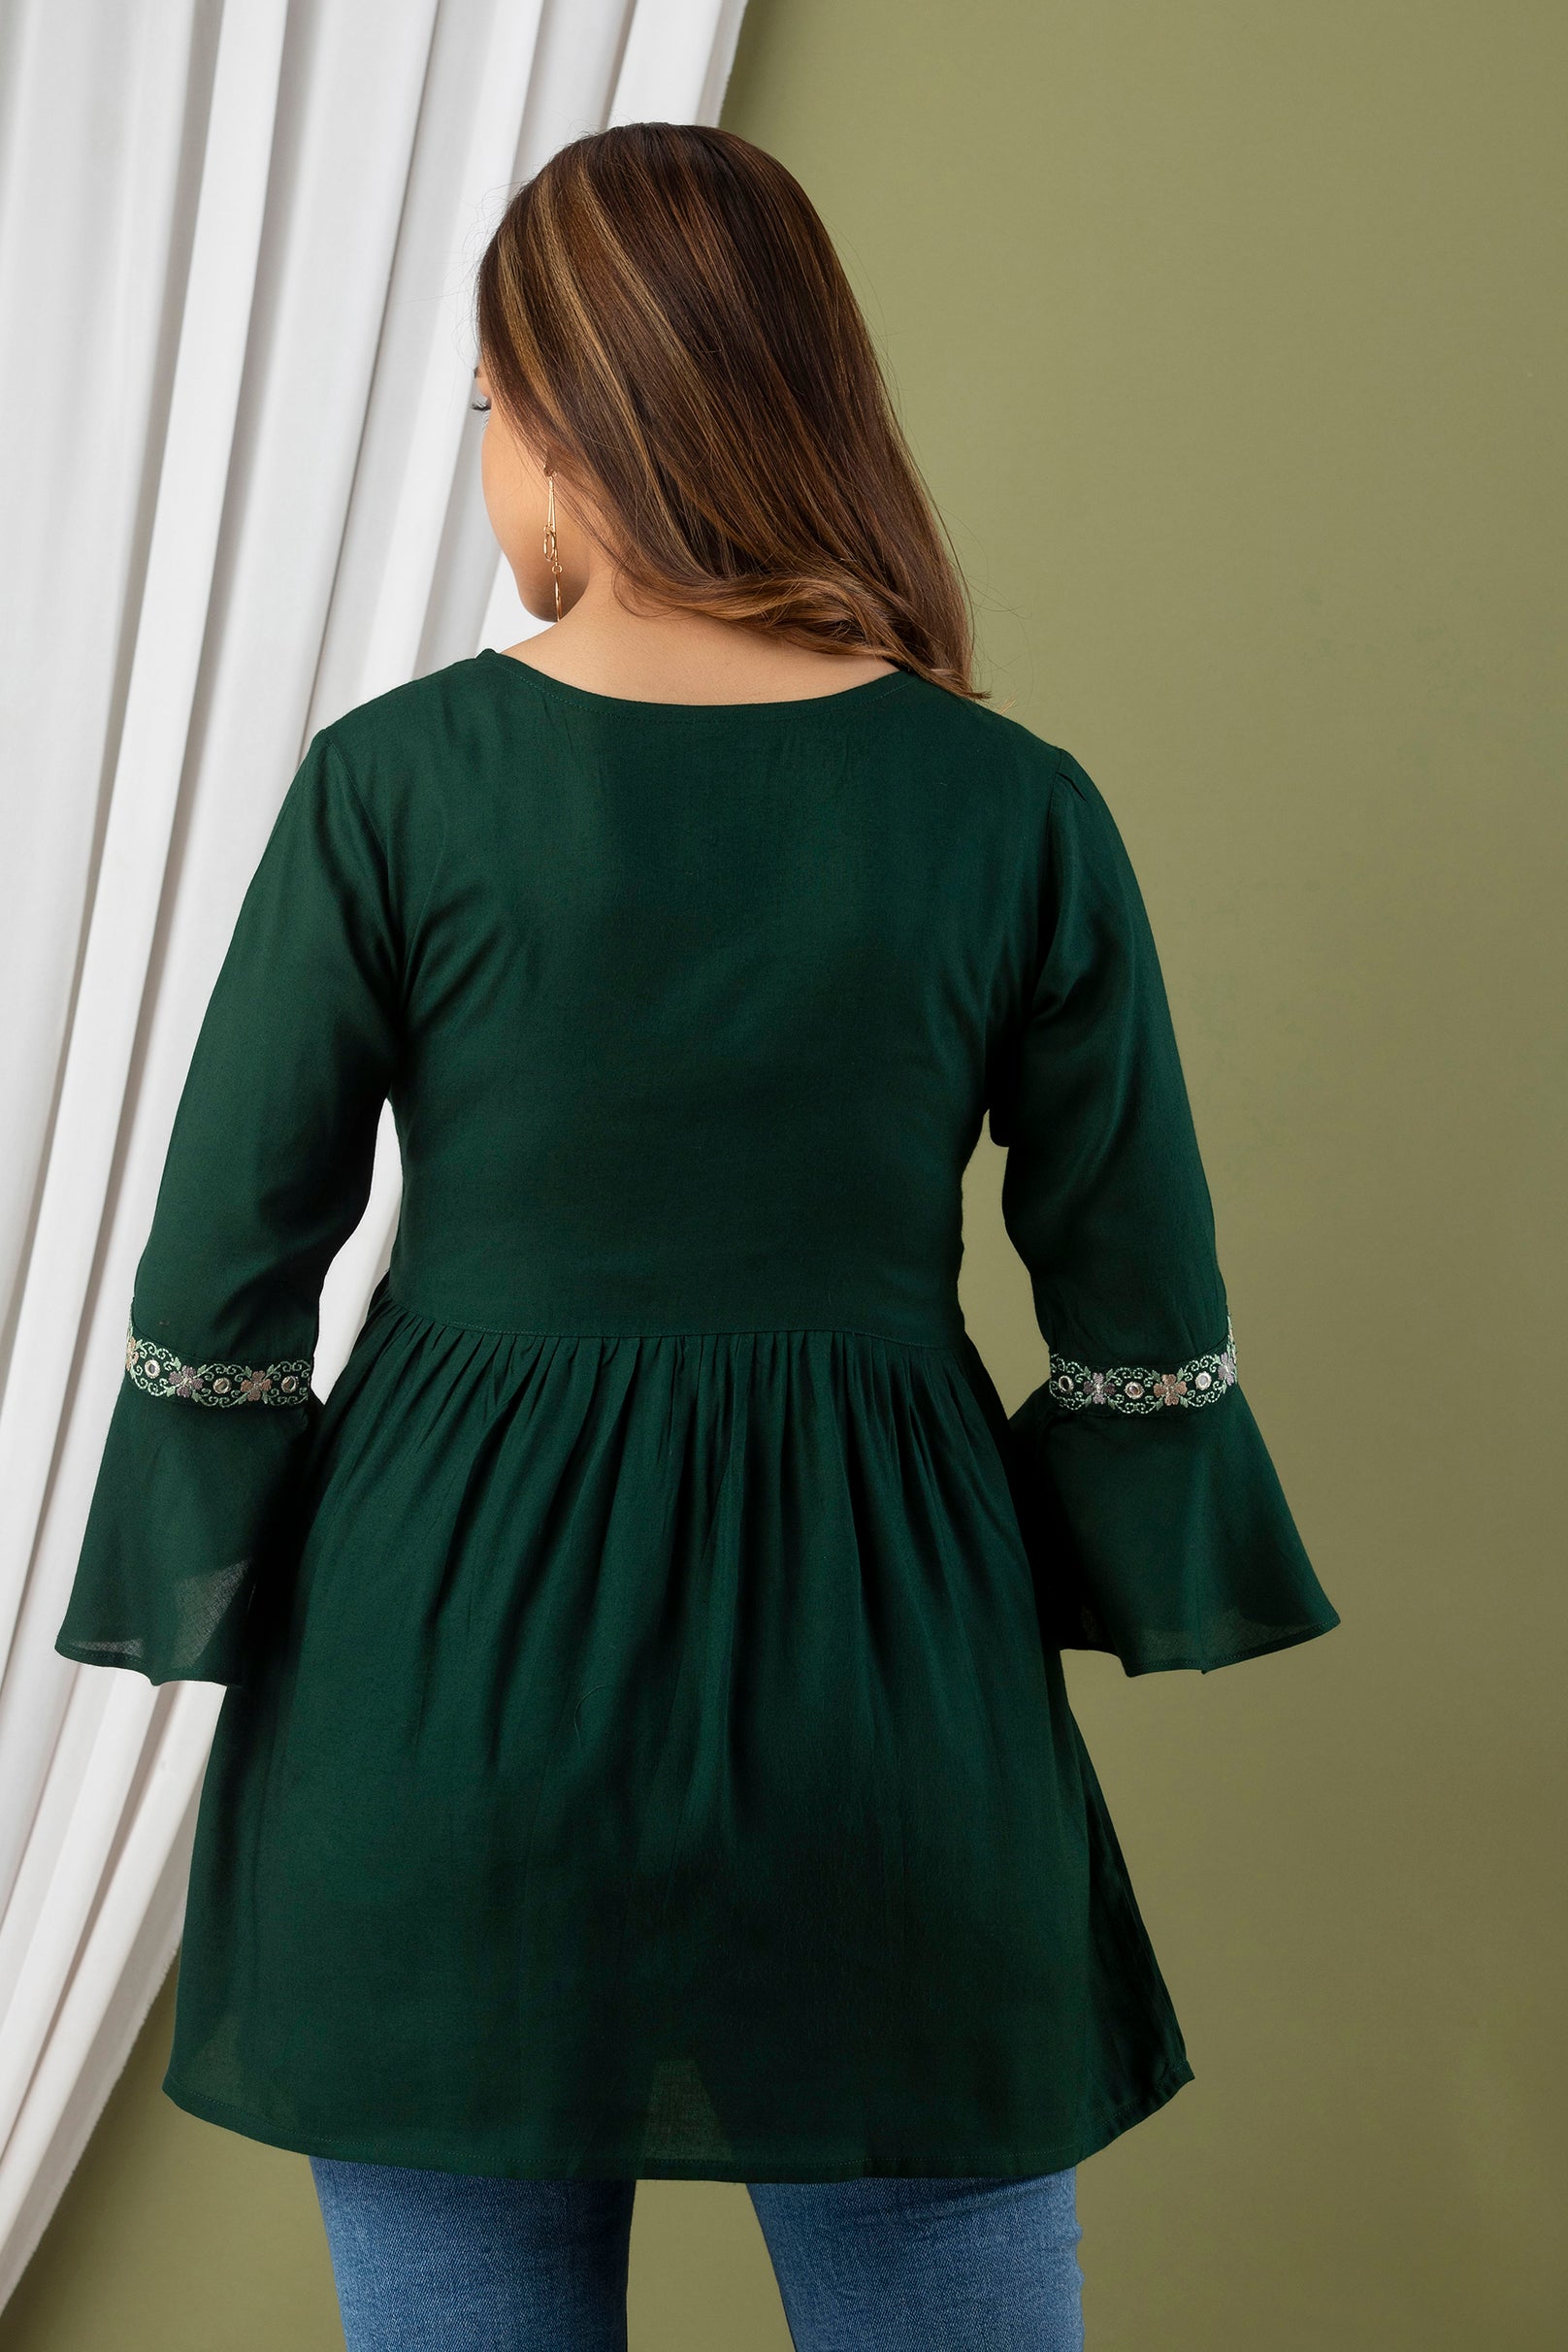 Women's Dark Green Bell Sleeve Top - Misskurti